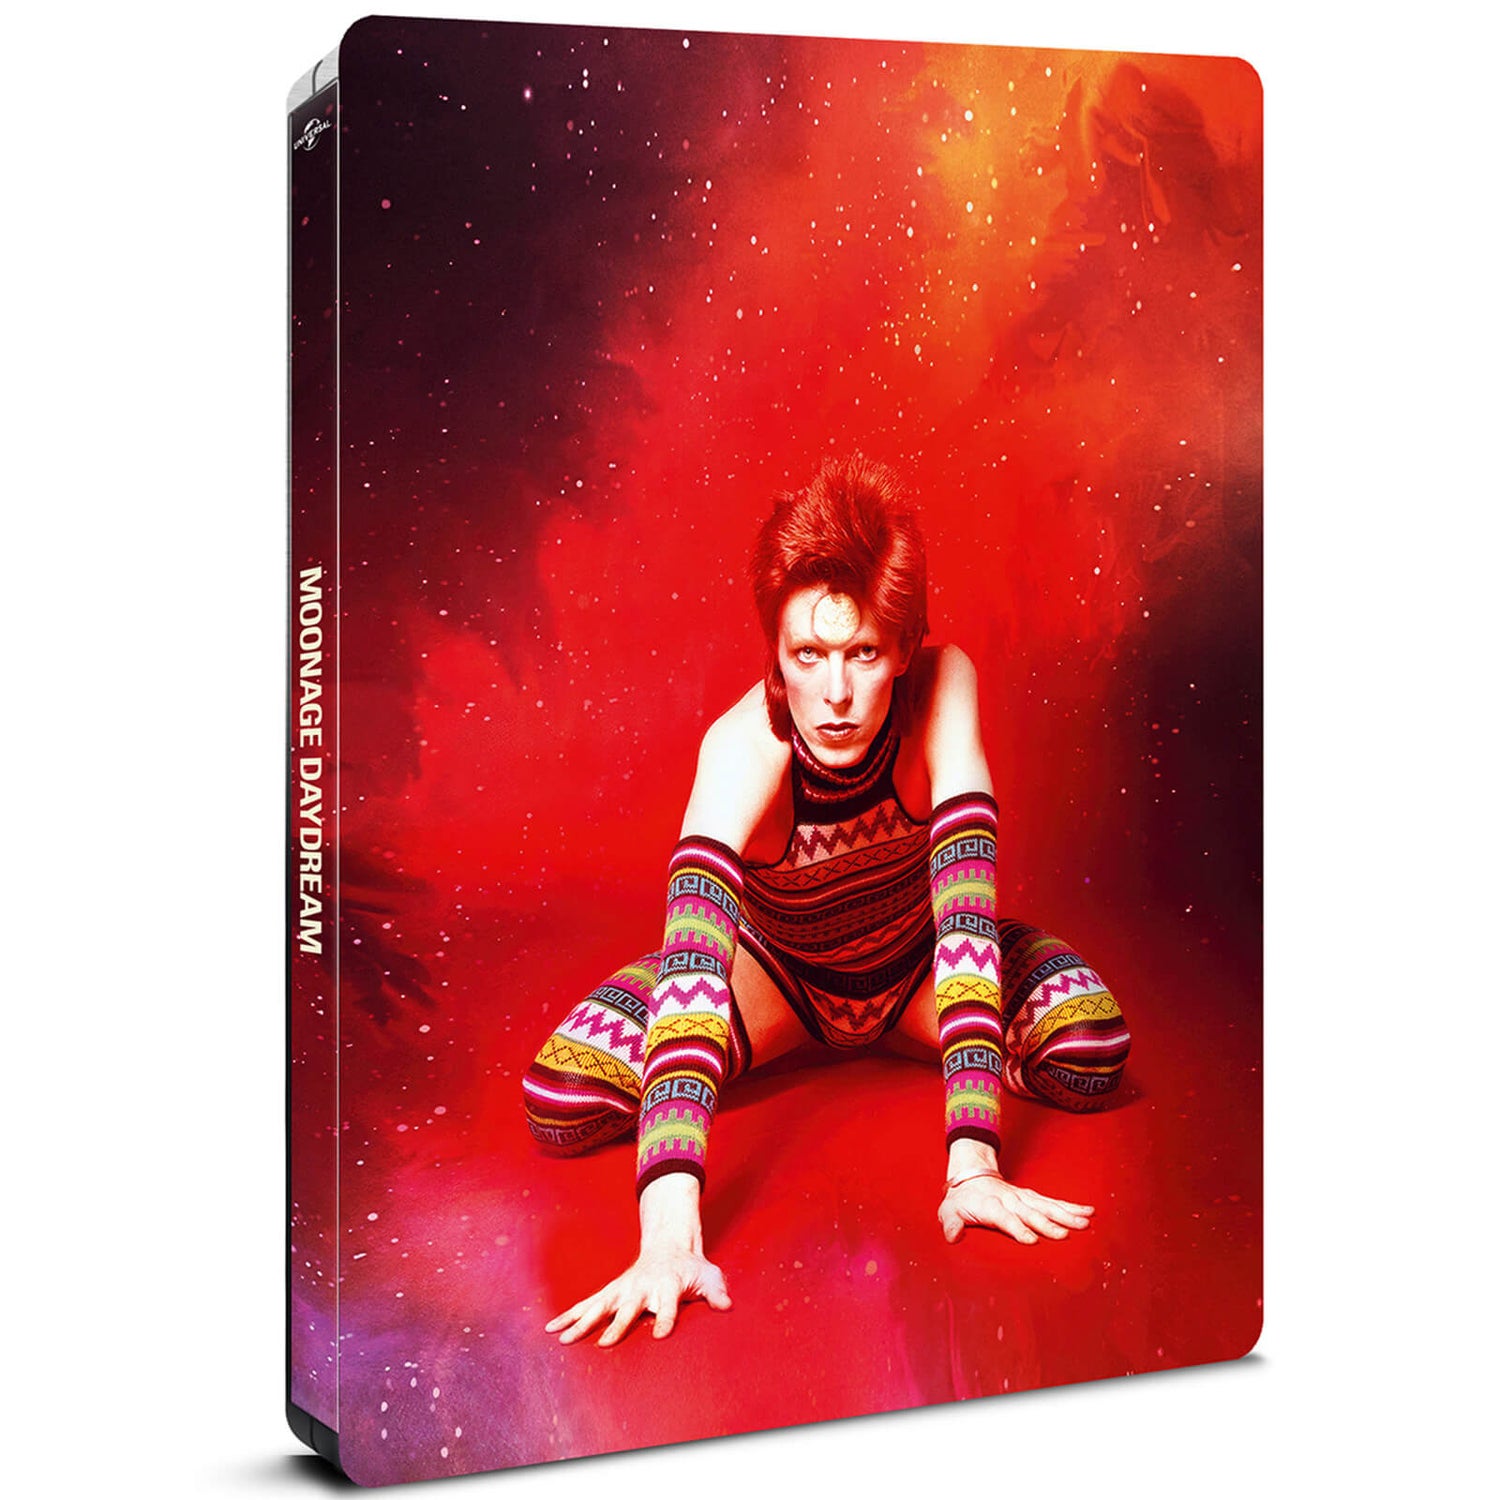 Moonage Daydream Limited Edition Steelbook 4K Ultra HD